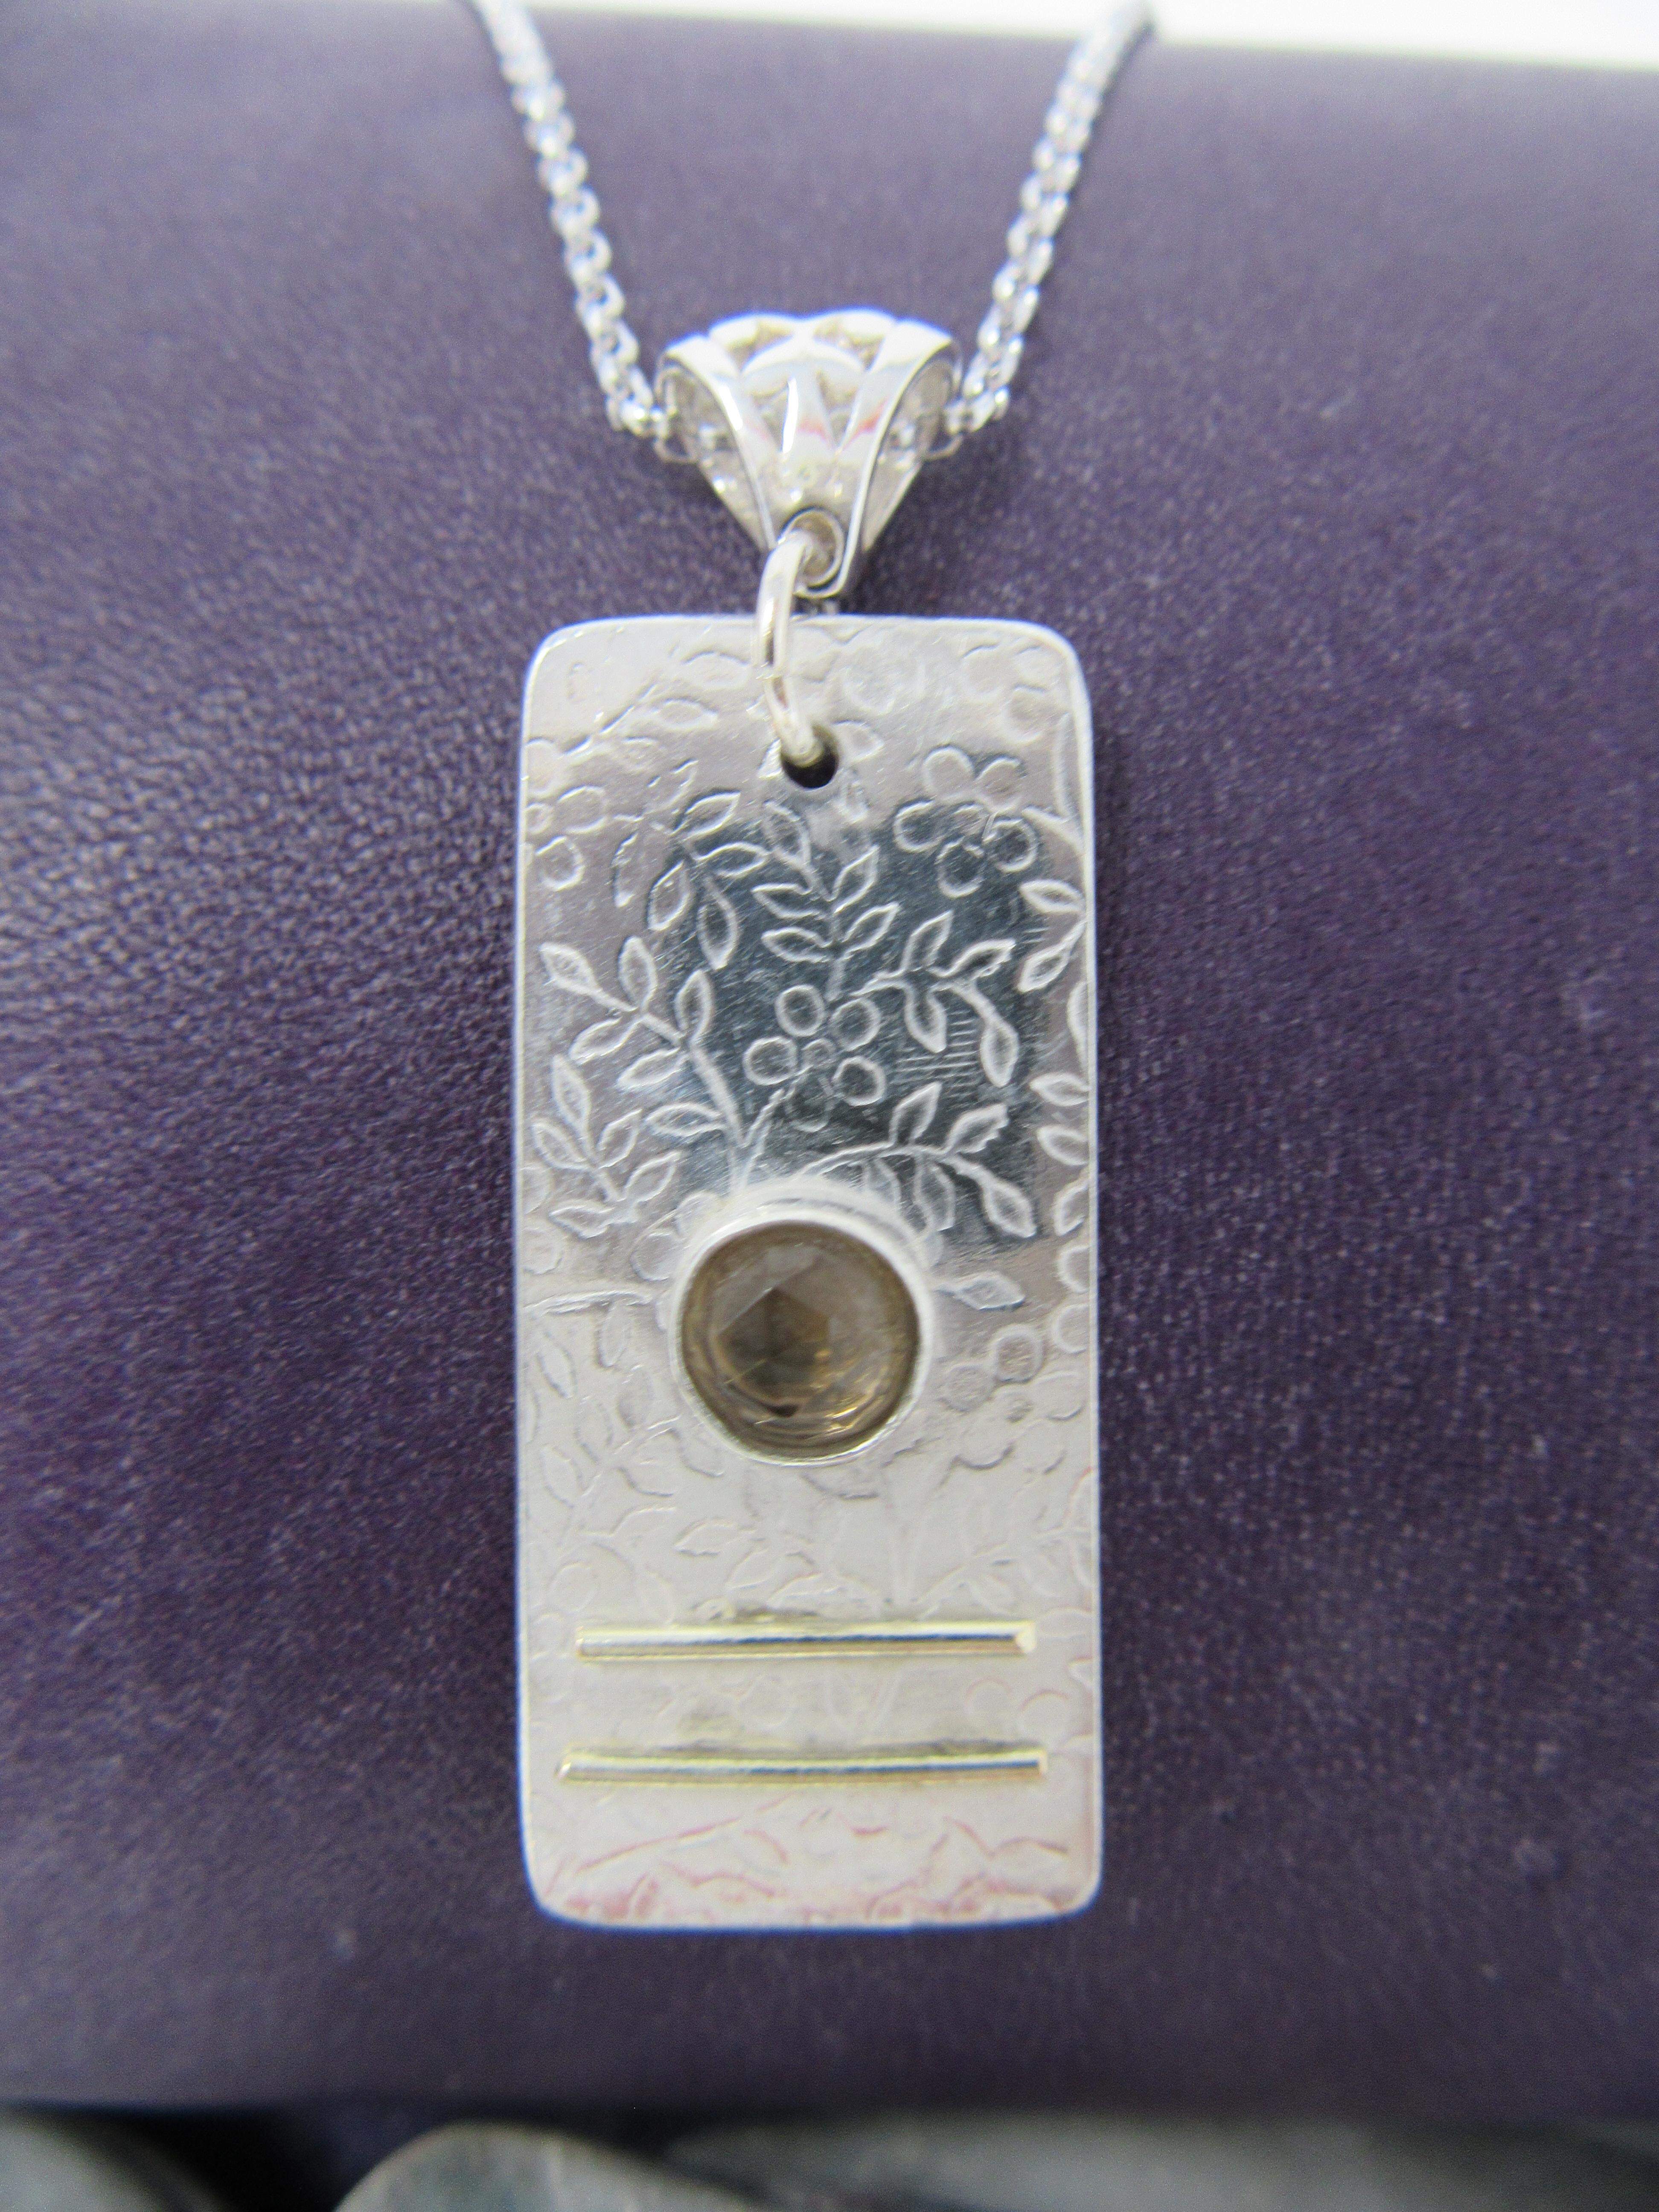 Smoky quartz silver pendant with filigree bezel